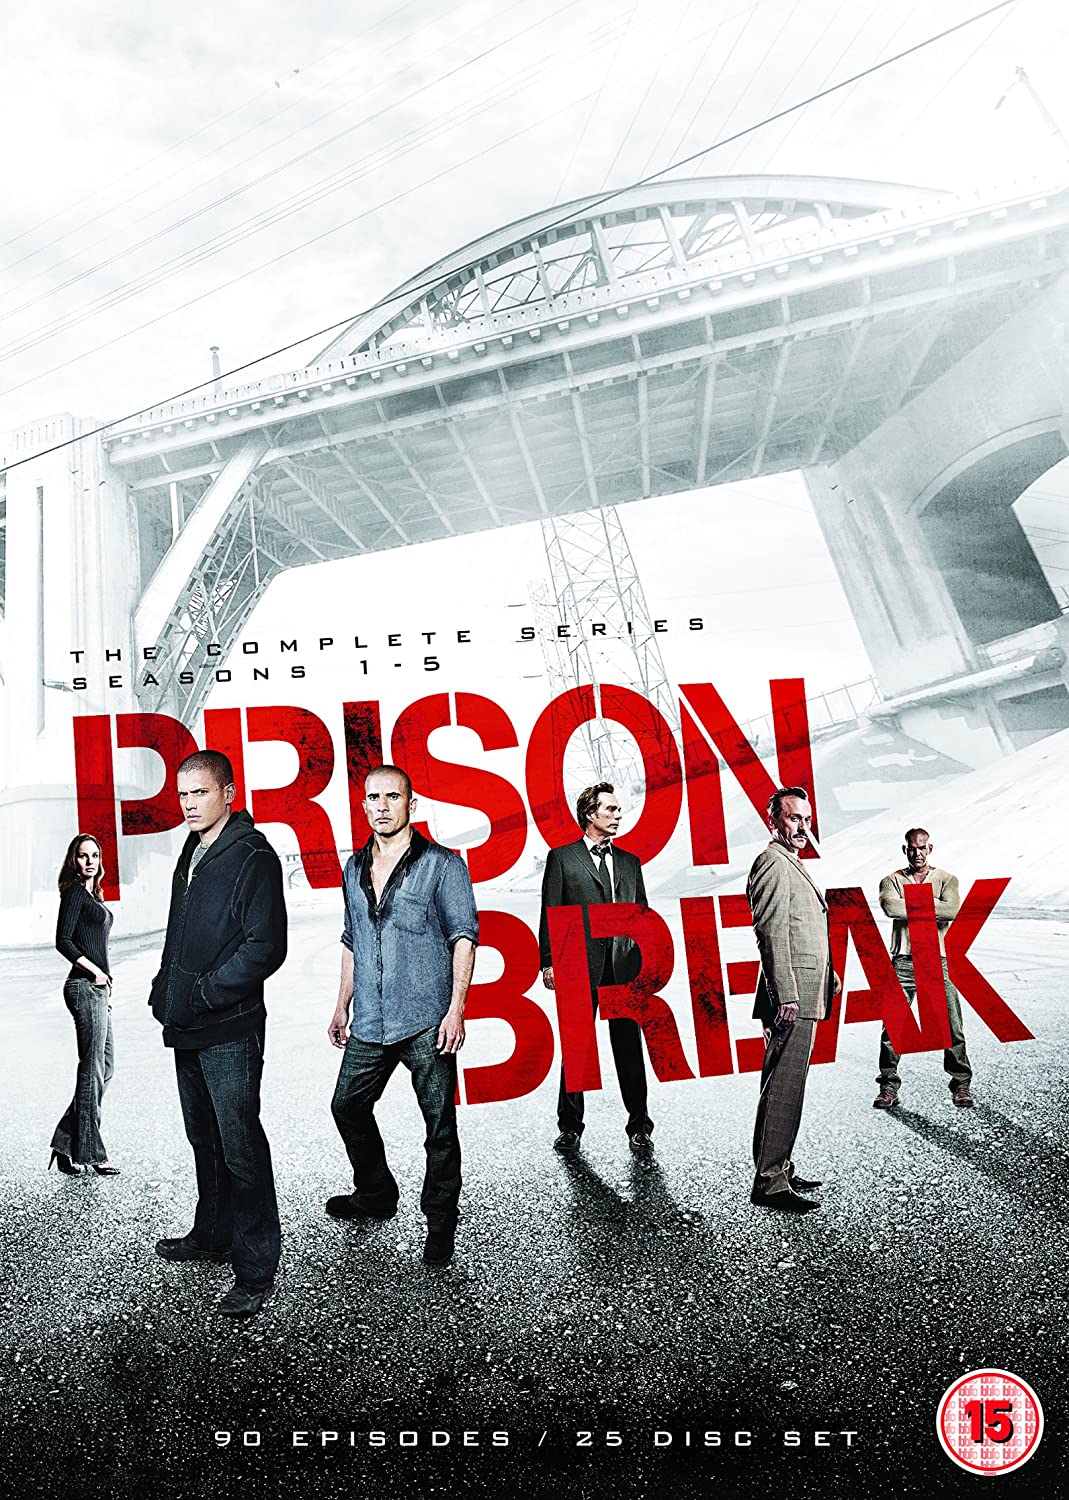 Prison Break: The Complete Series - Seasons 1-5  - Drama  [DVD]